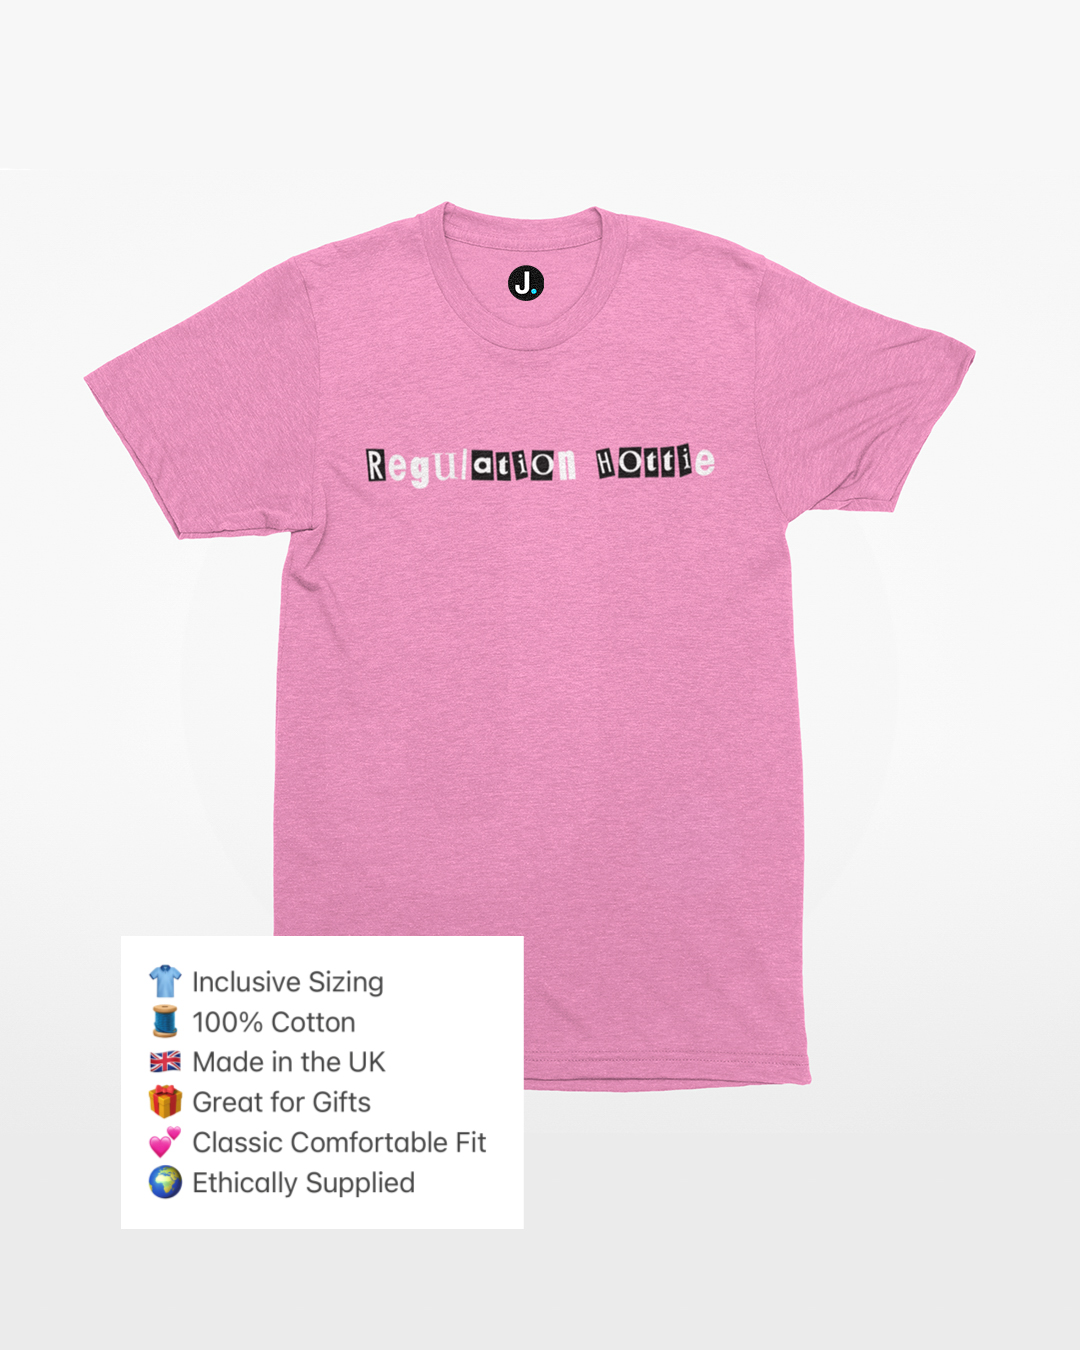 Regulation Hottie T-Shirt - Mean Girls Inspired T-Shirt - Cady Heron Mean Girls T-Shirt - Regulation Hottie Mean Girls Inspired T-Shirt